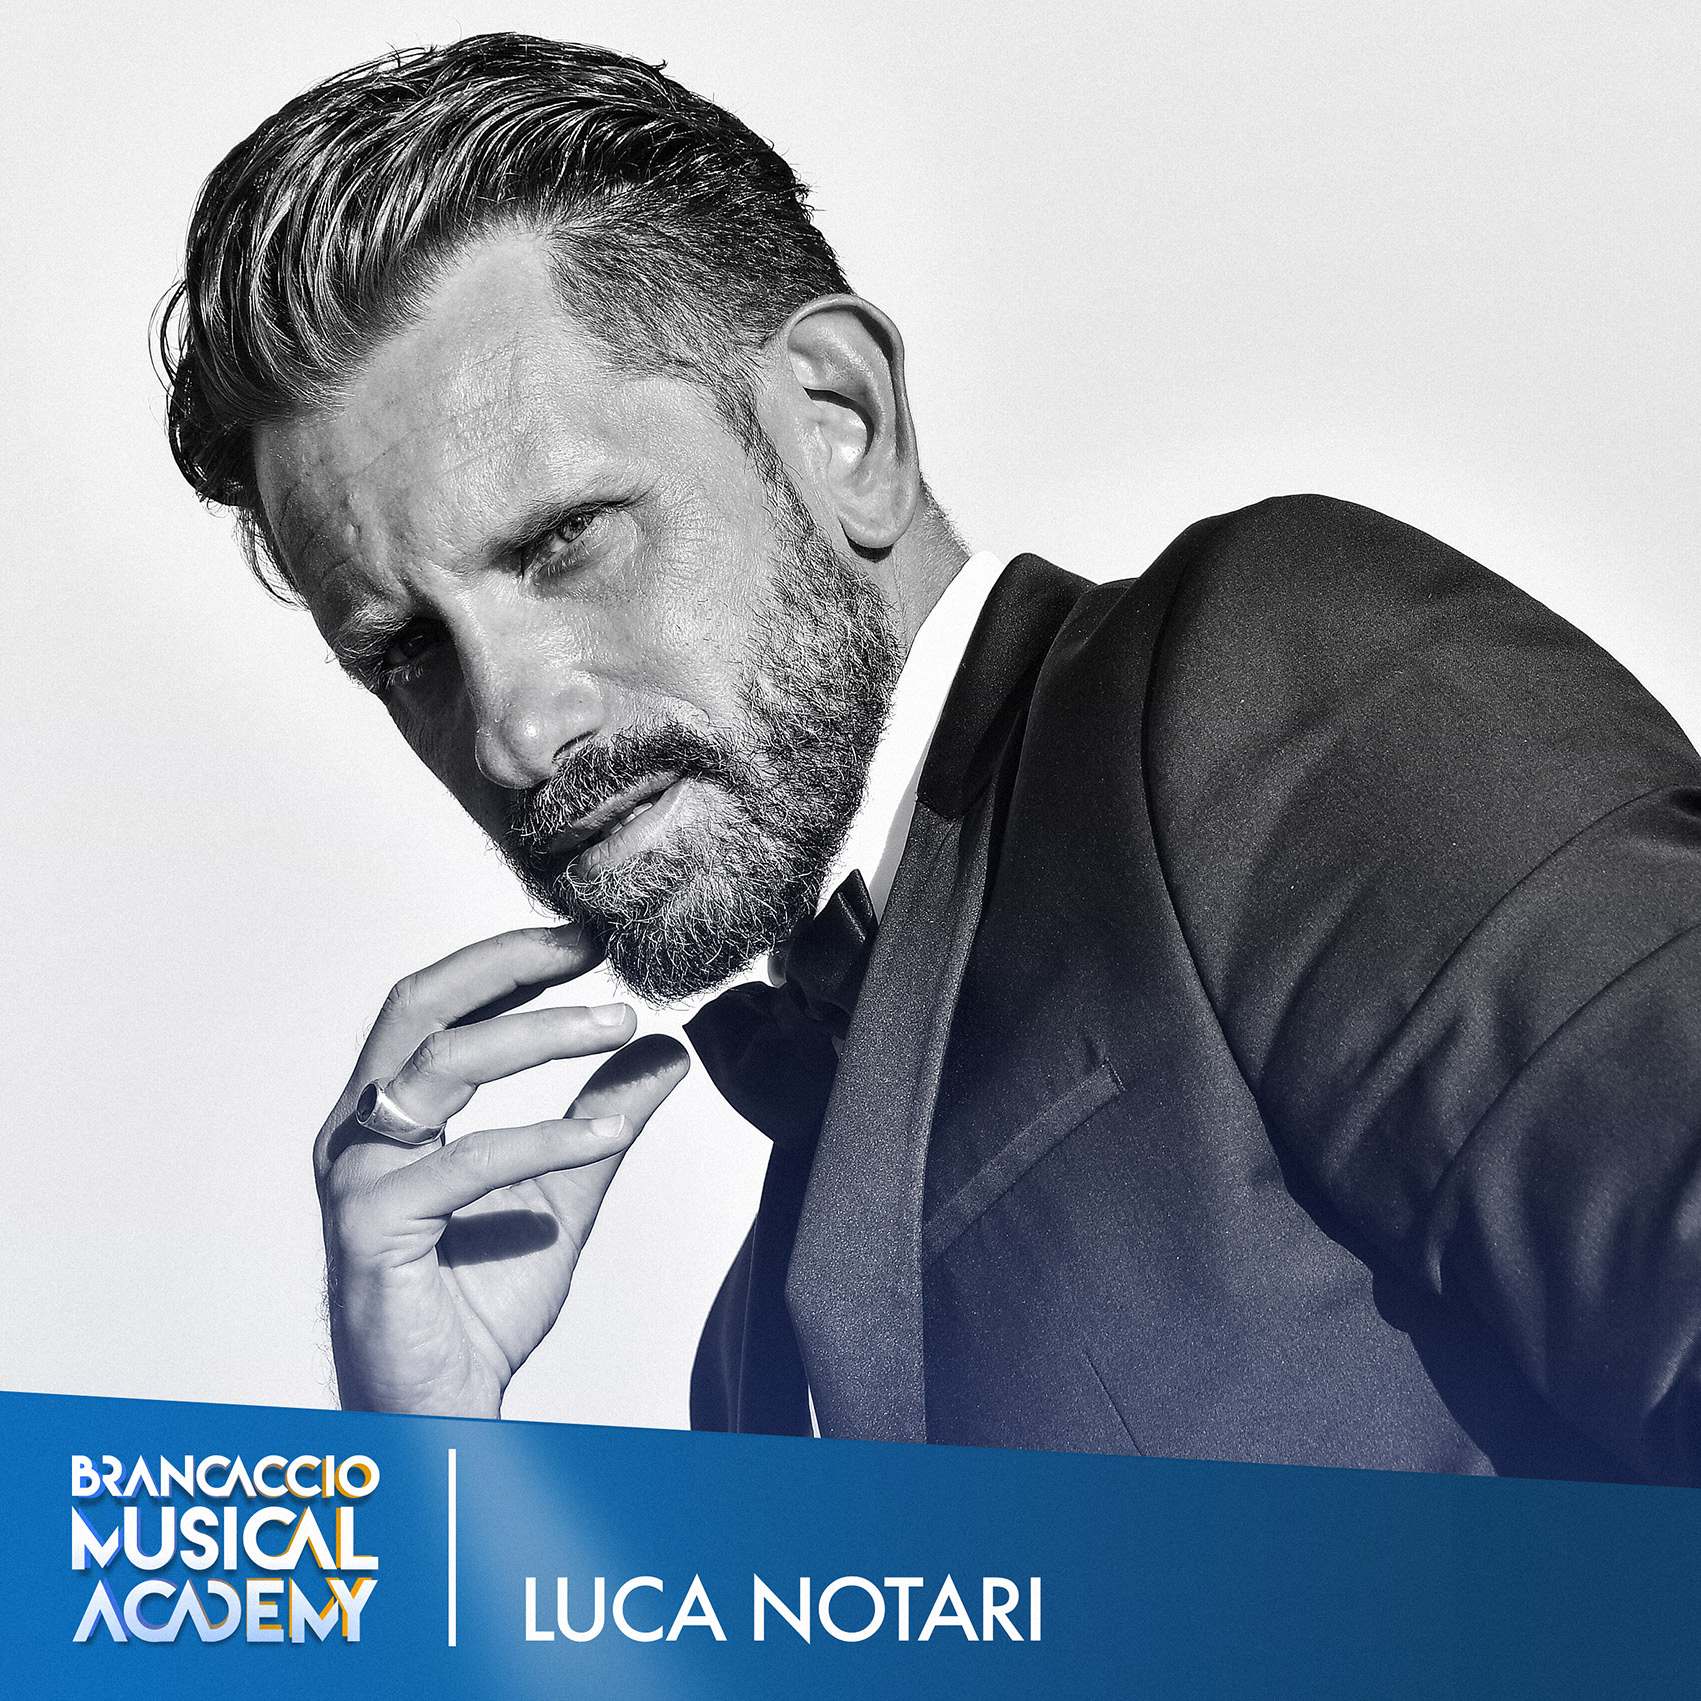 Luca Notari